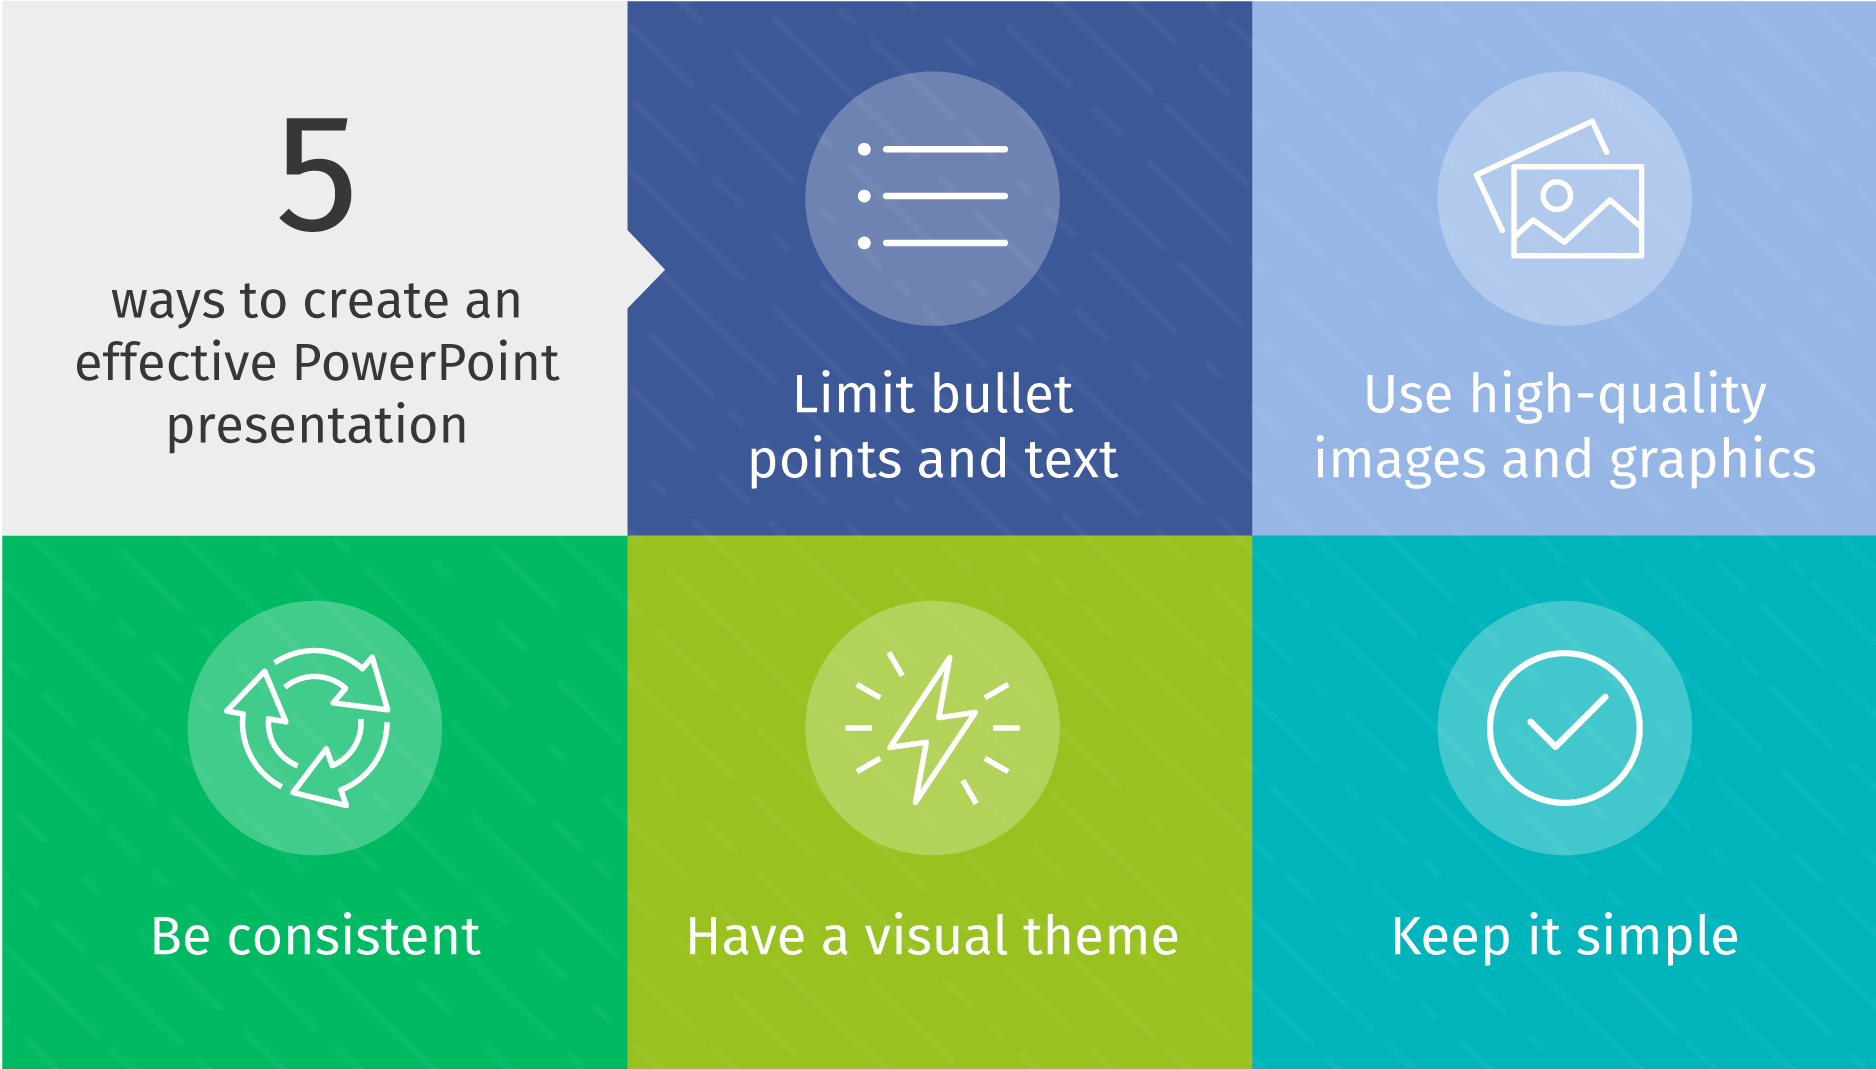 5 ways to create an effective PowerPoint presentation